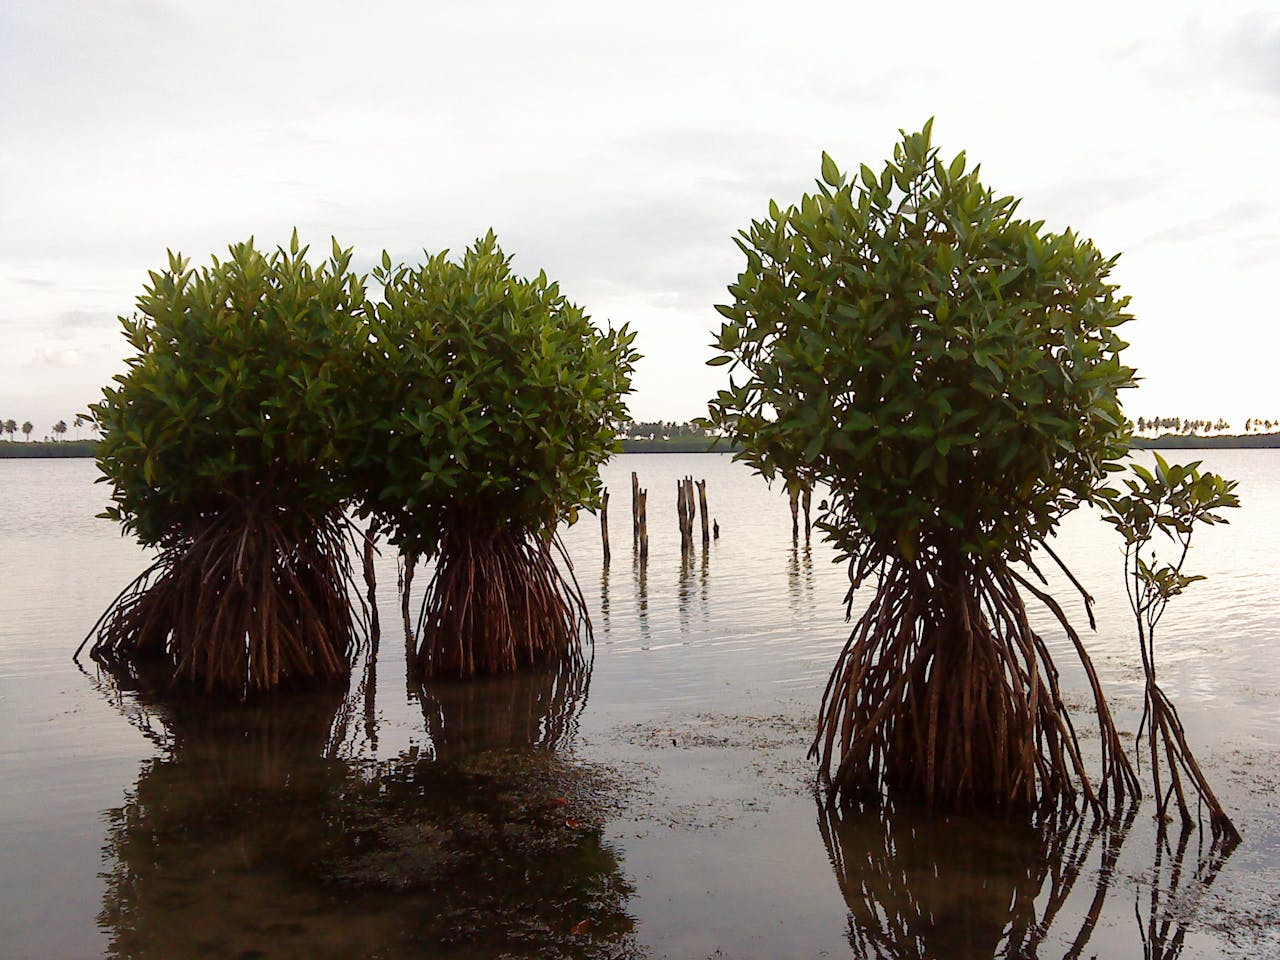 In Sri Lanka and beyond, seagrass key to livelihoods, marine habitats